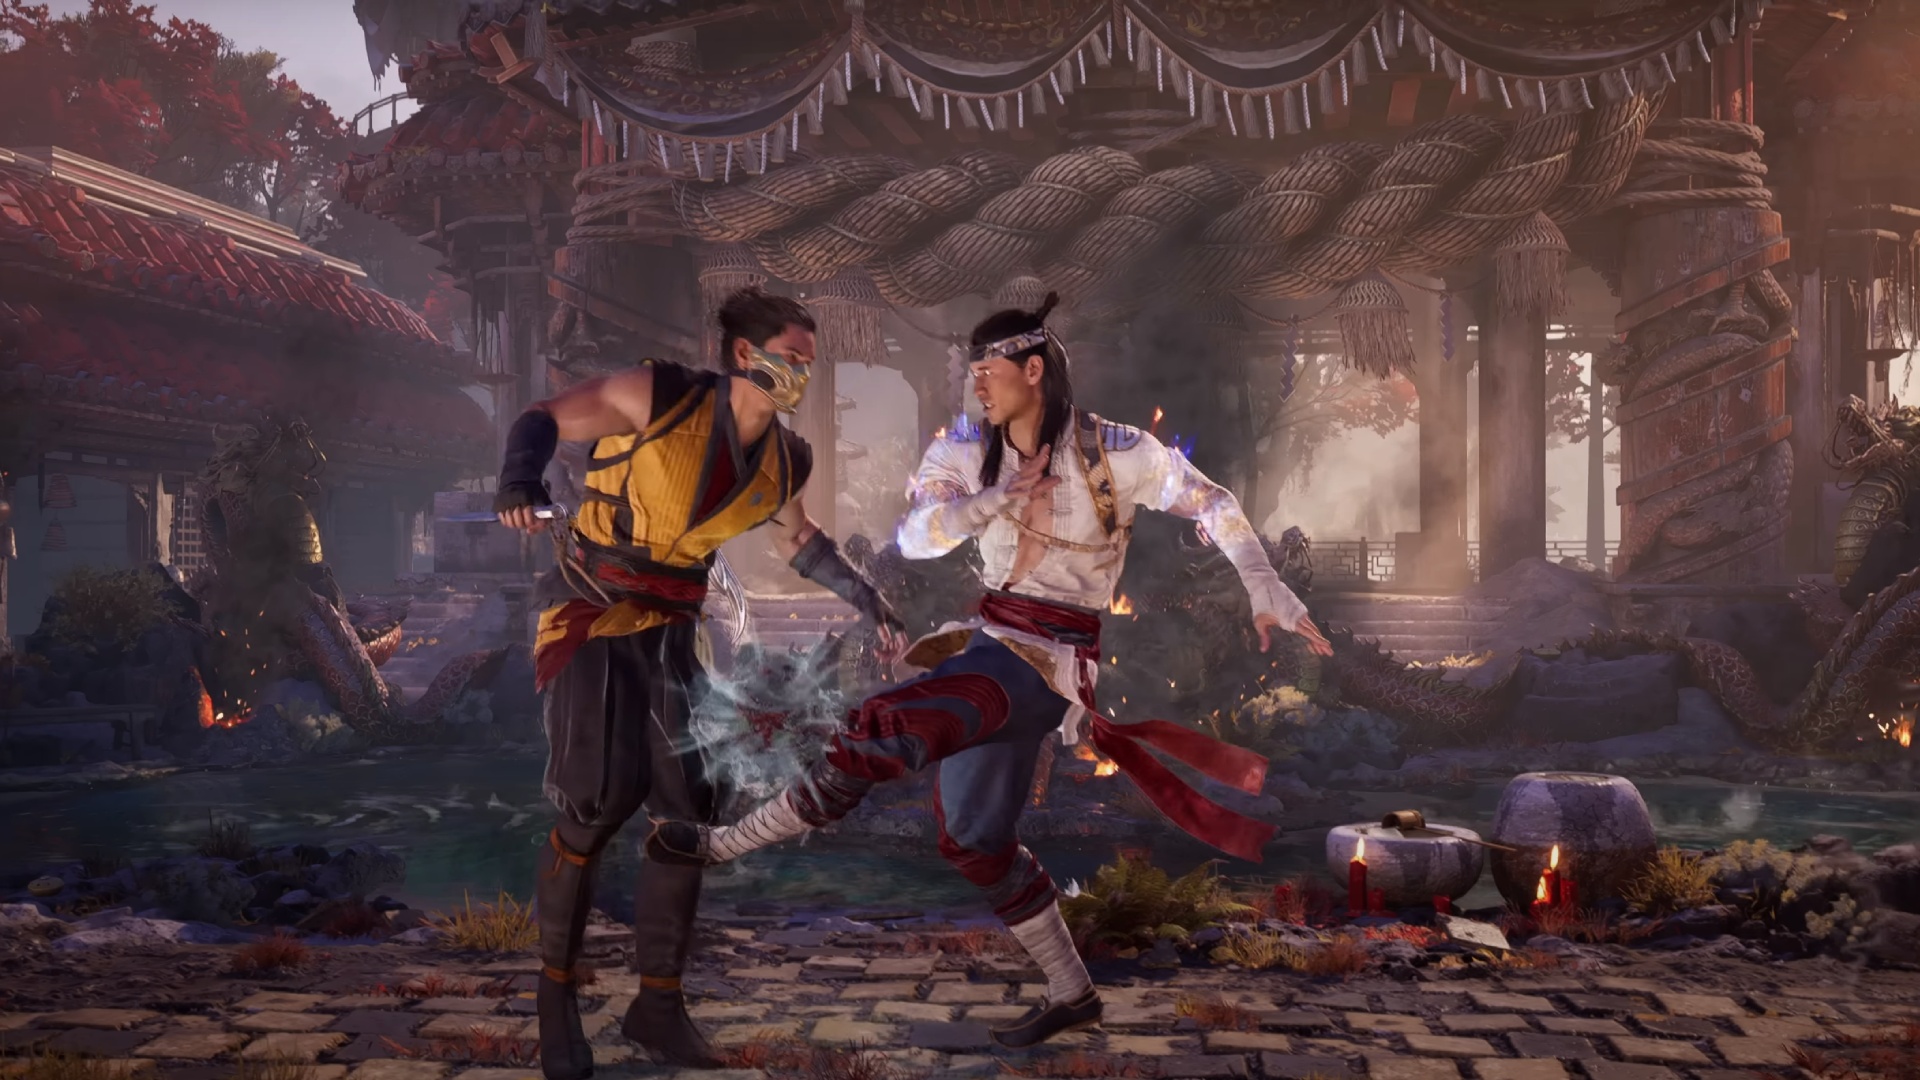 Mortal Kombat 1 characters: Liu Kang kicking Scorpion.